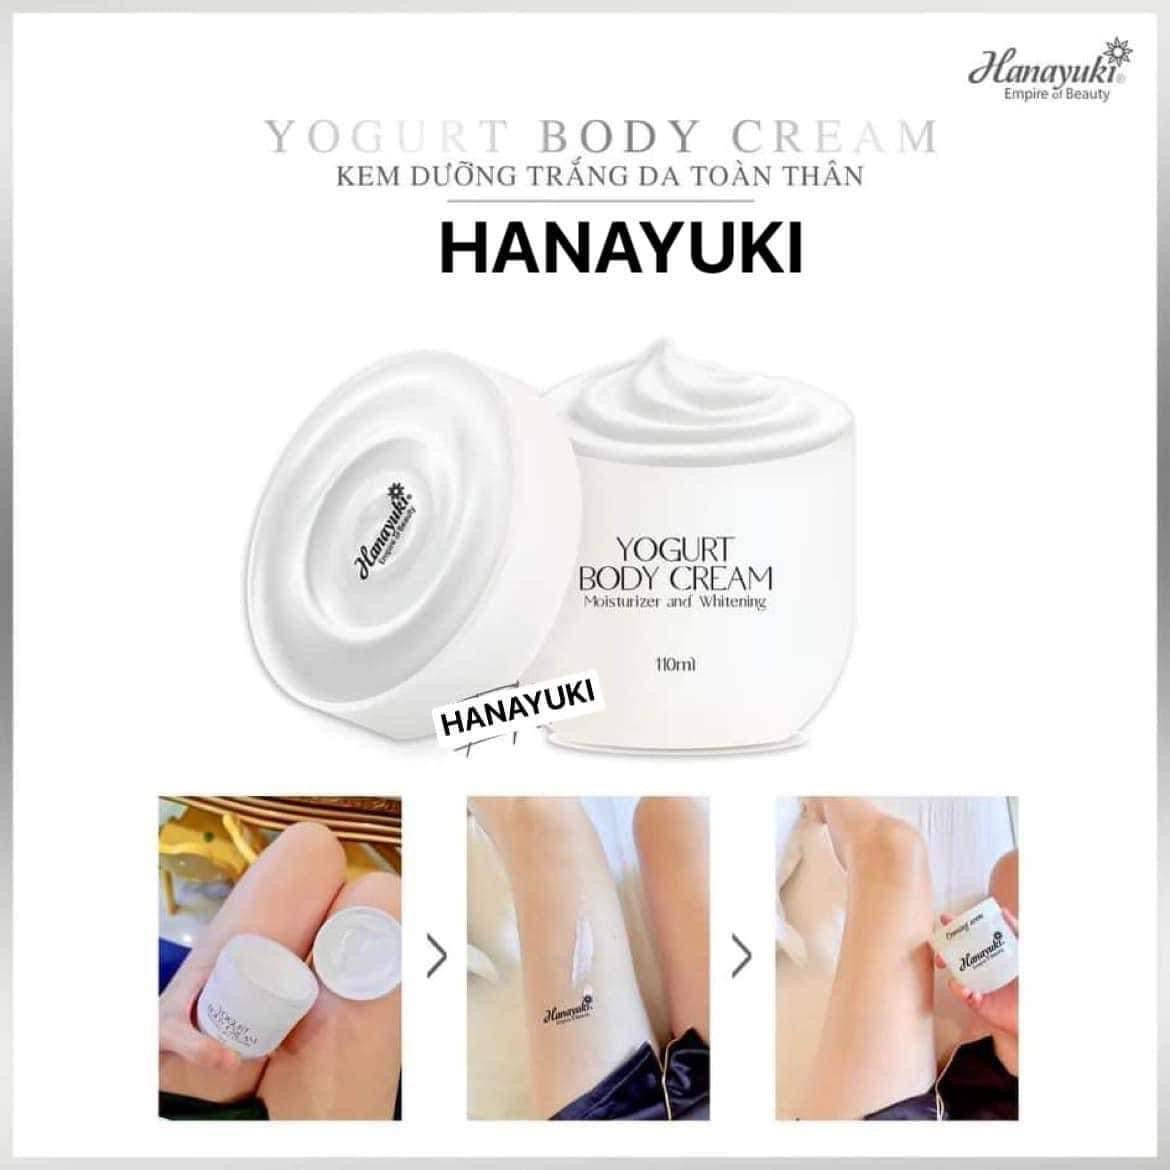 Kem body sua chua yogurt Hanayuki